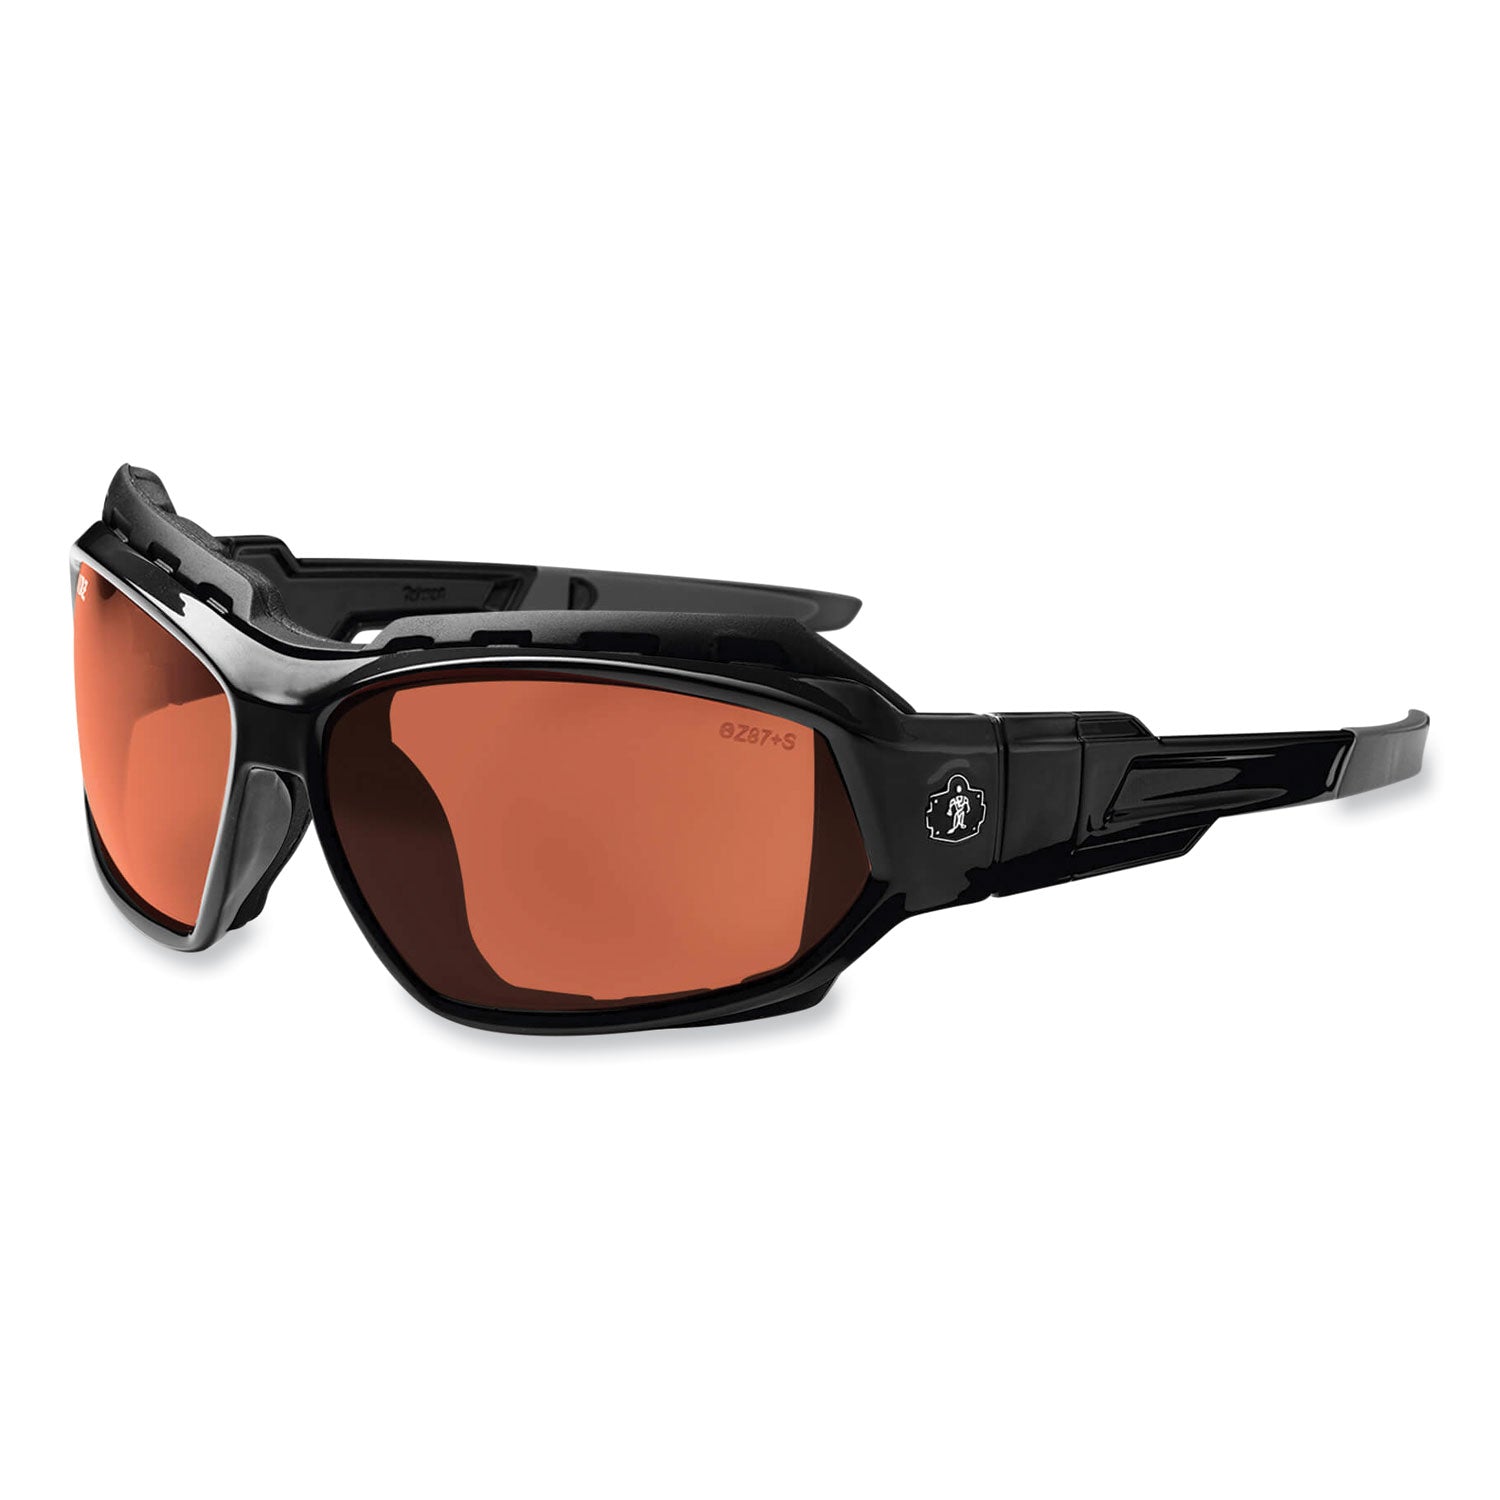 skullerz-loki-safety-glasses-goggles-black-nylon-impact-frame-polarized-copper-polycarb-lens-ships-in-1-3-business-days_ego56021 - 1